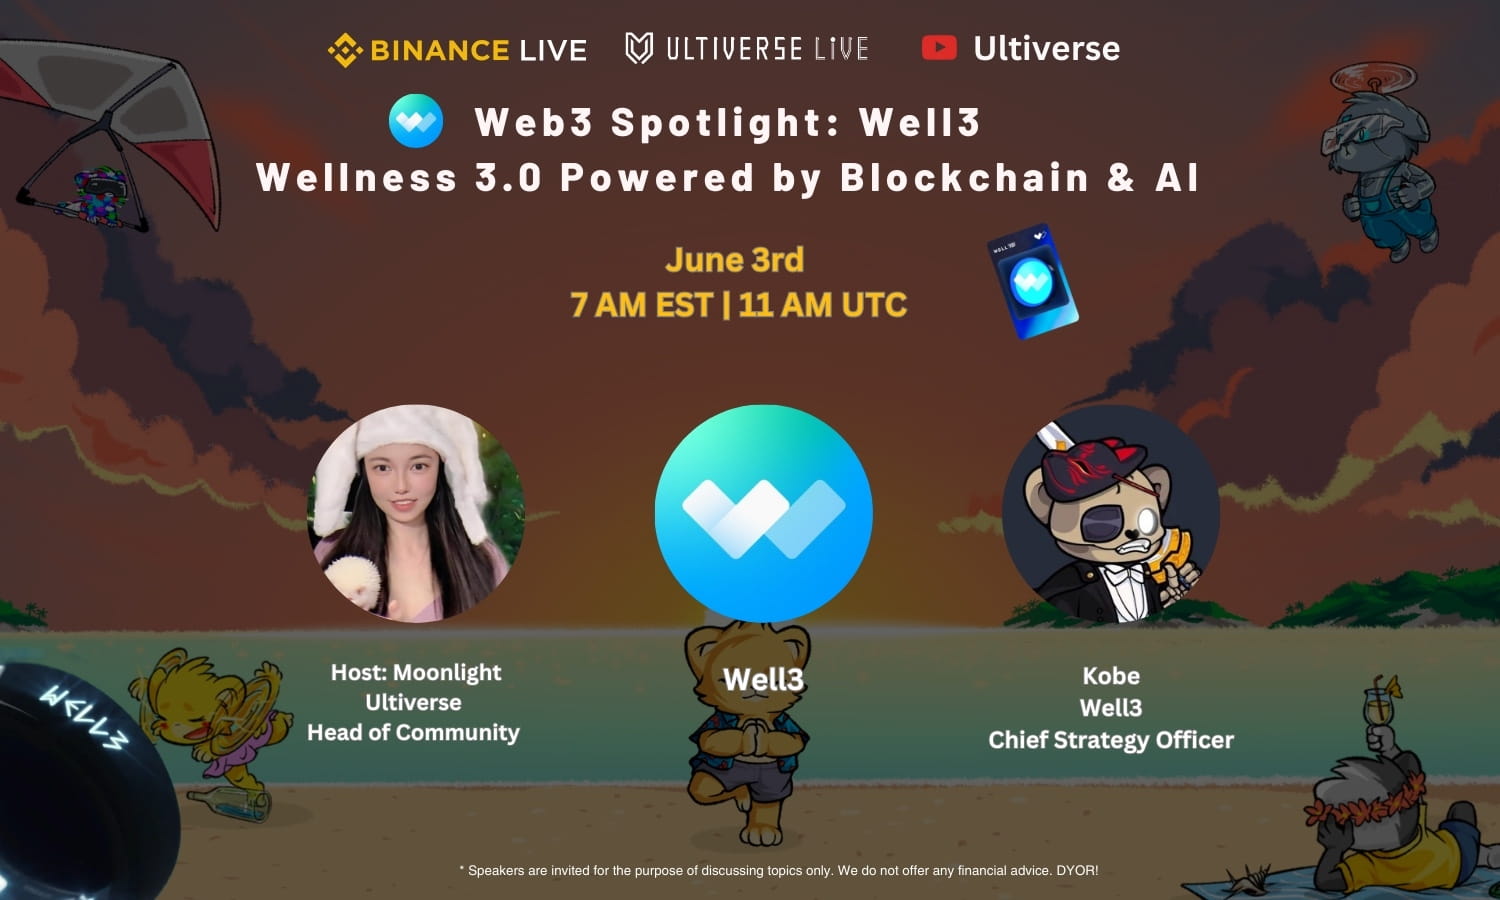 Web3 Spotlight: Well3 - Wellness 3.0 Powered by Blockchain & AI